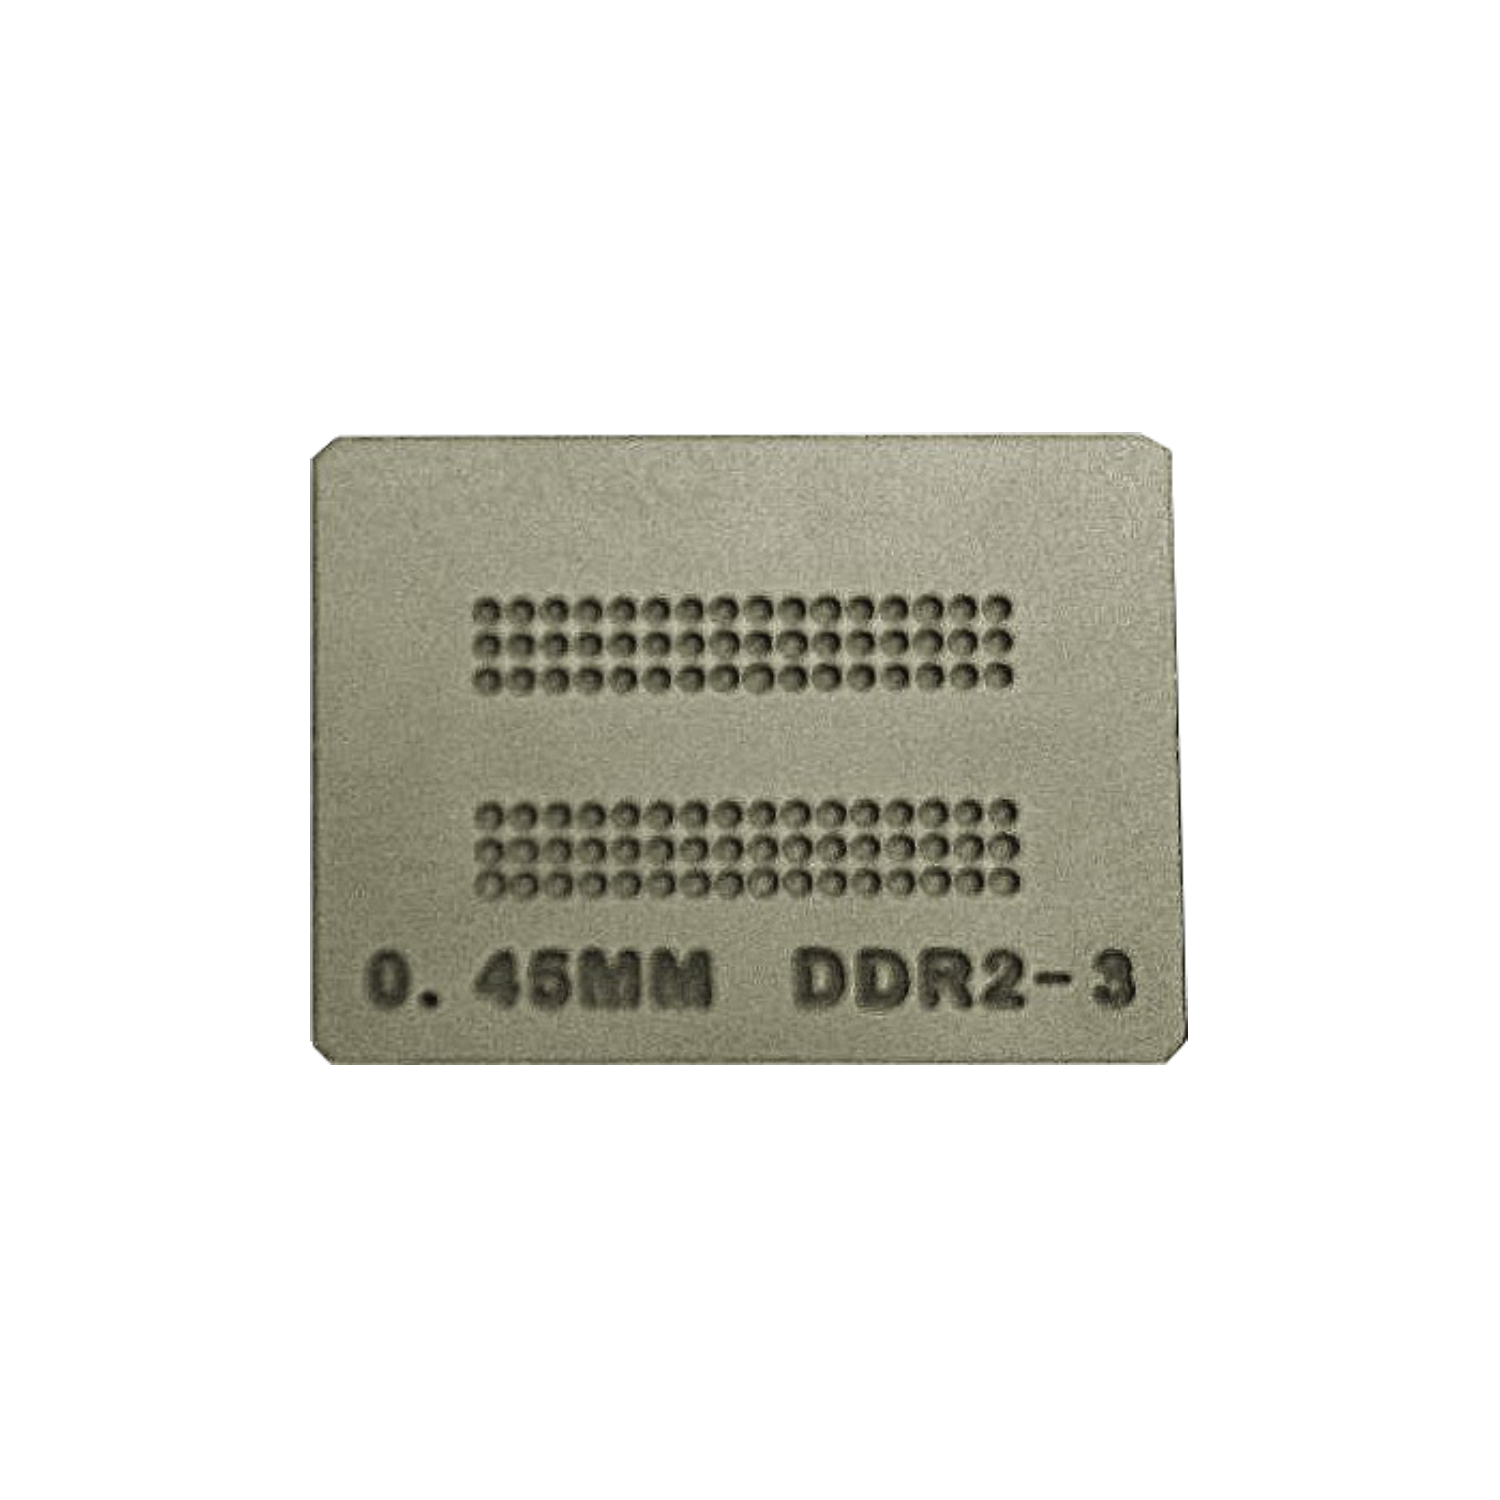 Kit stencil PS4 DDR2-3 Bga Calor Direto Reballing GM30 + solda esfera 0.45mm + suporte